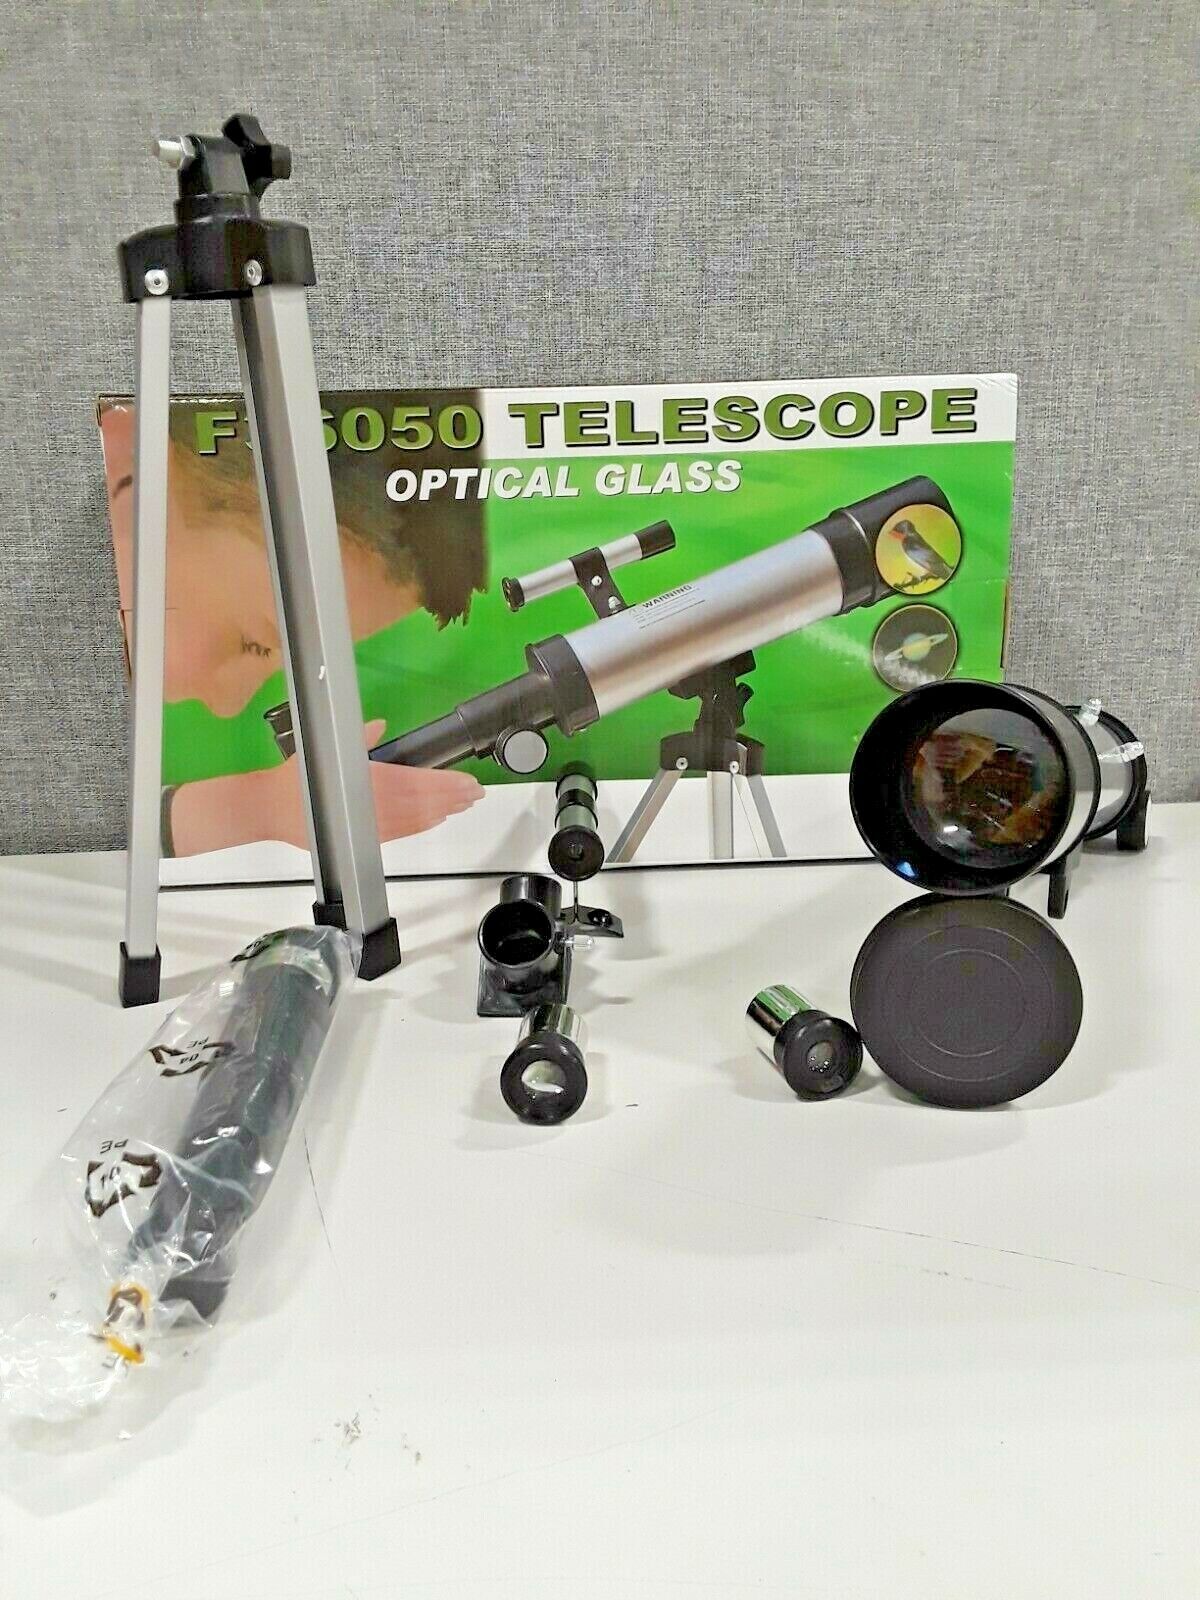 F36050 Optical Glass Telescope 6mm + 20mm Eyepieces Sturdy Tripod - Gray/Black 